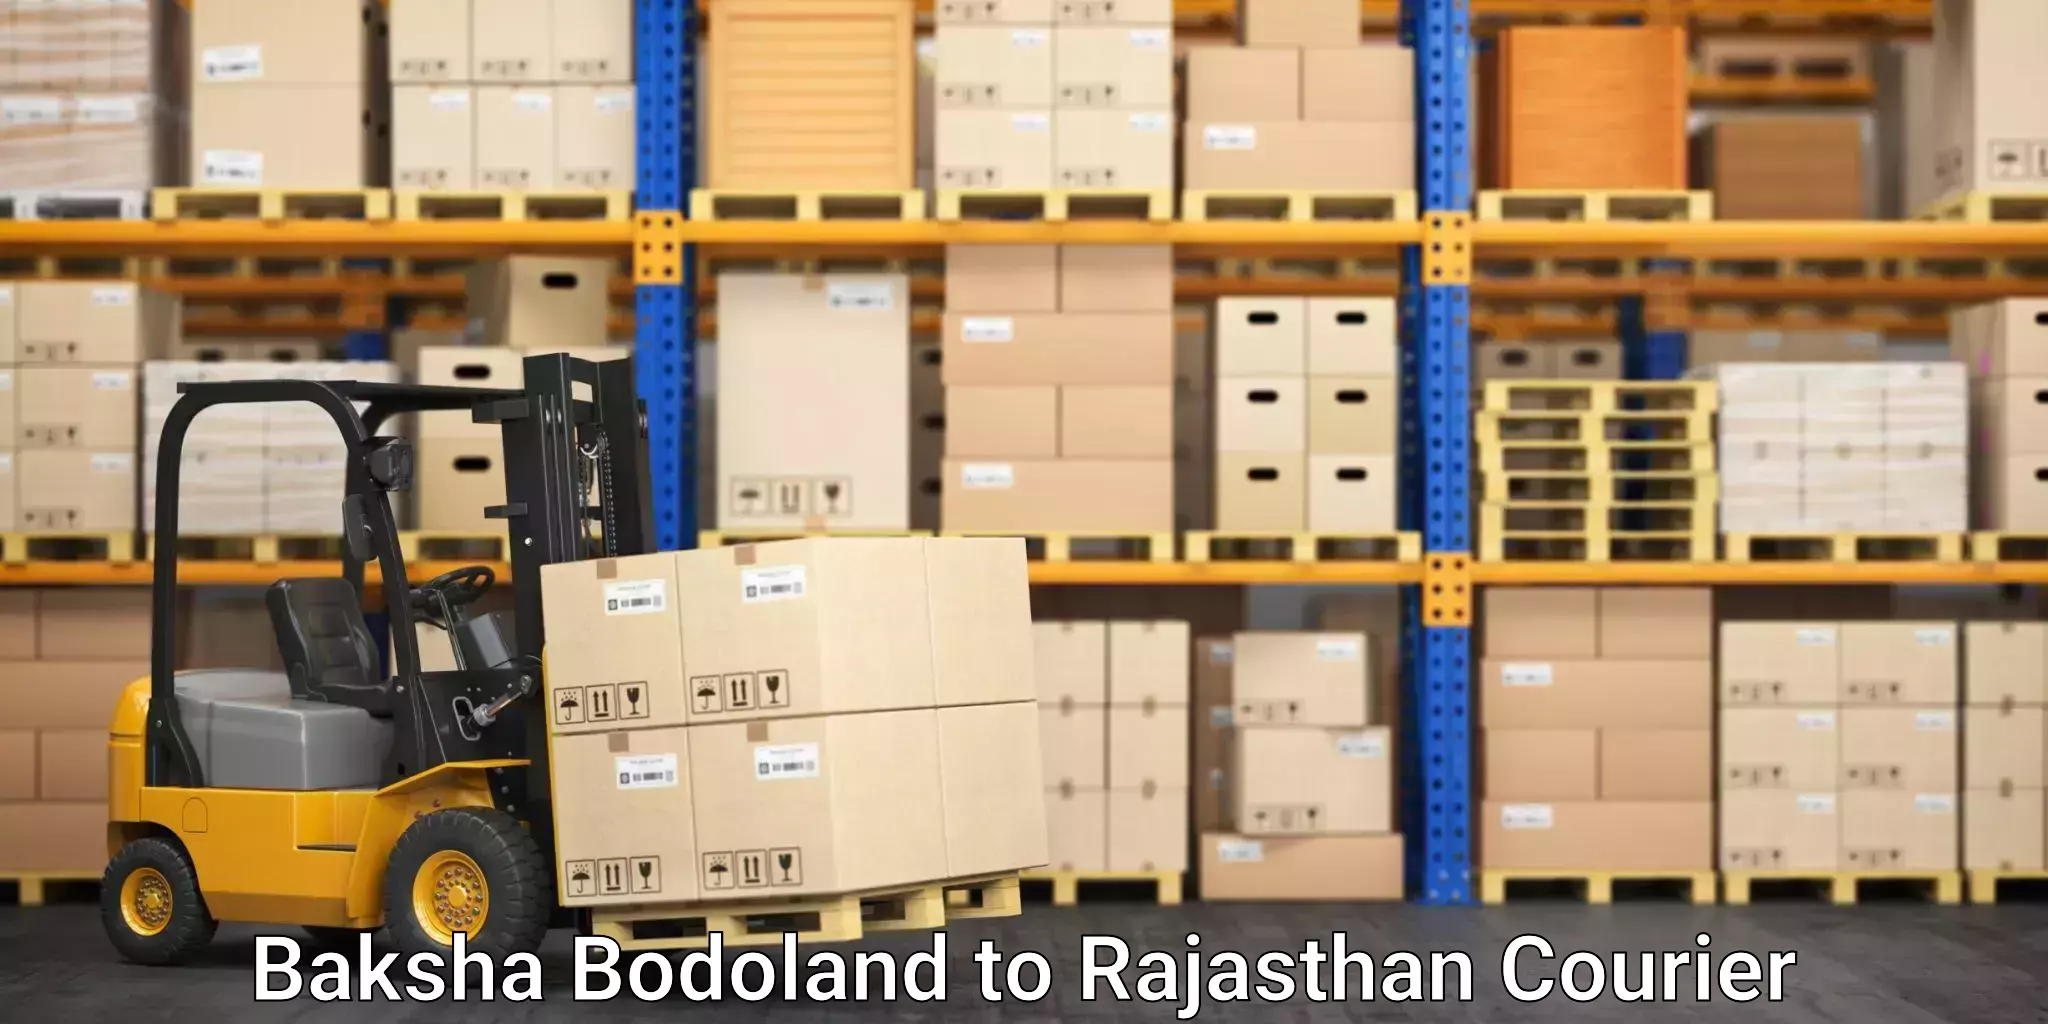 Efficient cargo handling in Baksha Bodoland to Merta